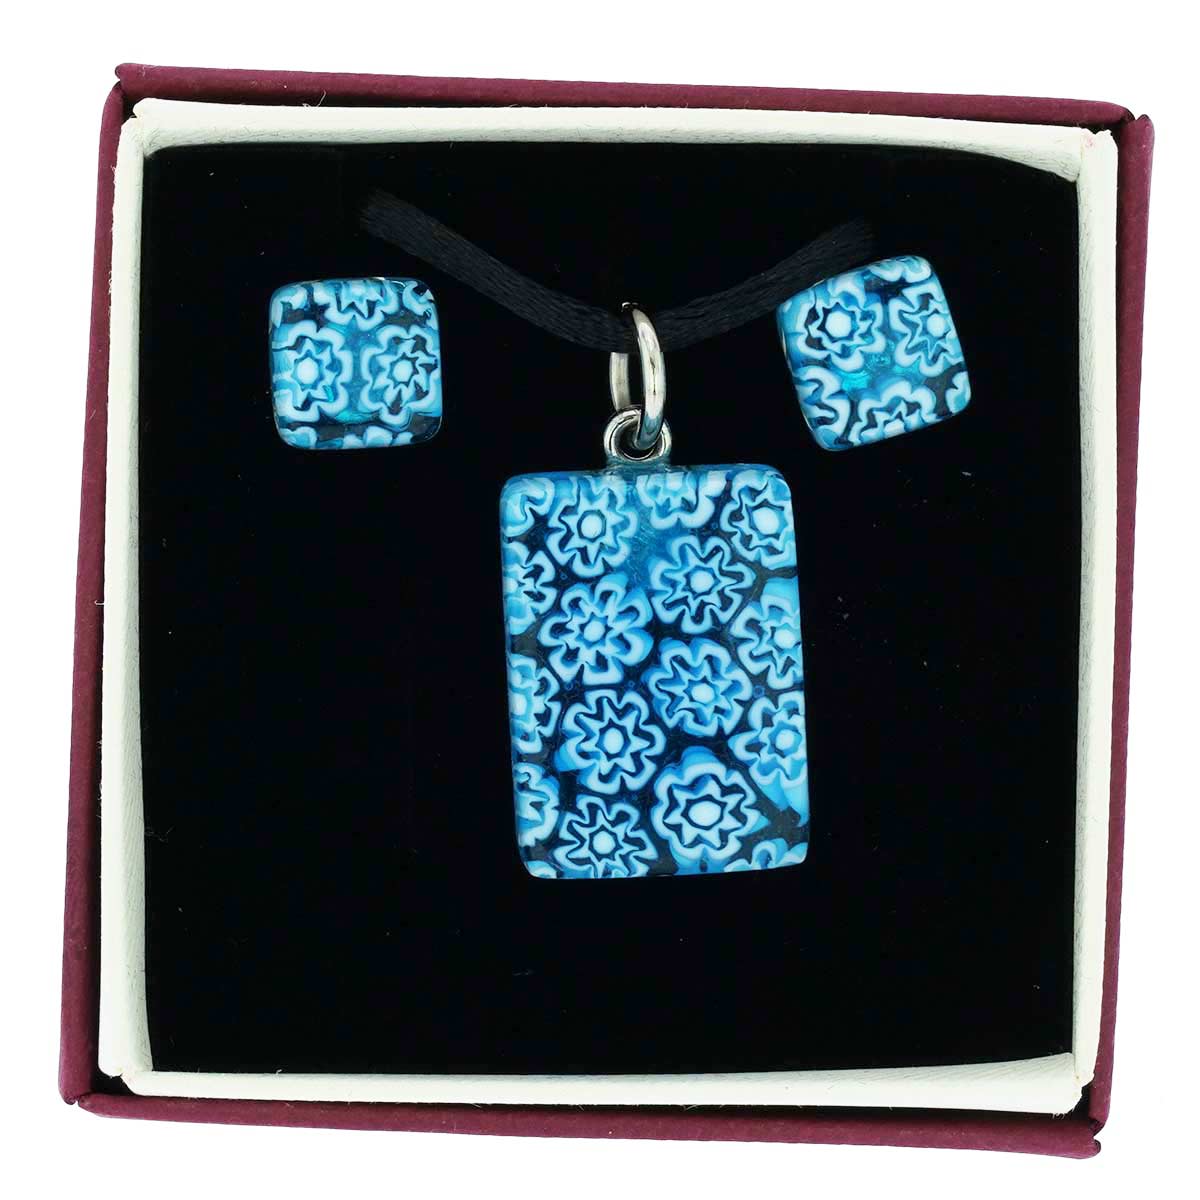 Murano Glass Millefiori Necklace and Earrings Set - Aqua Blue